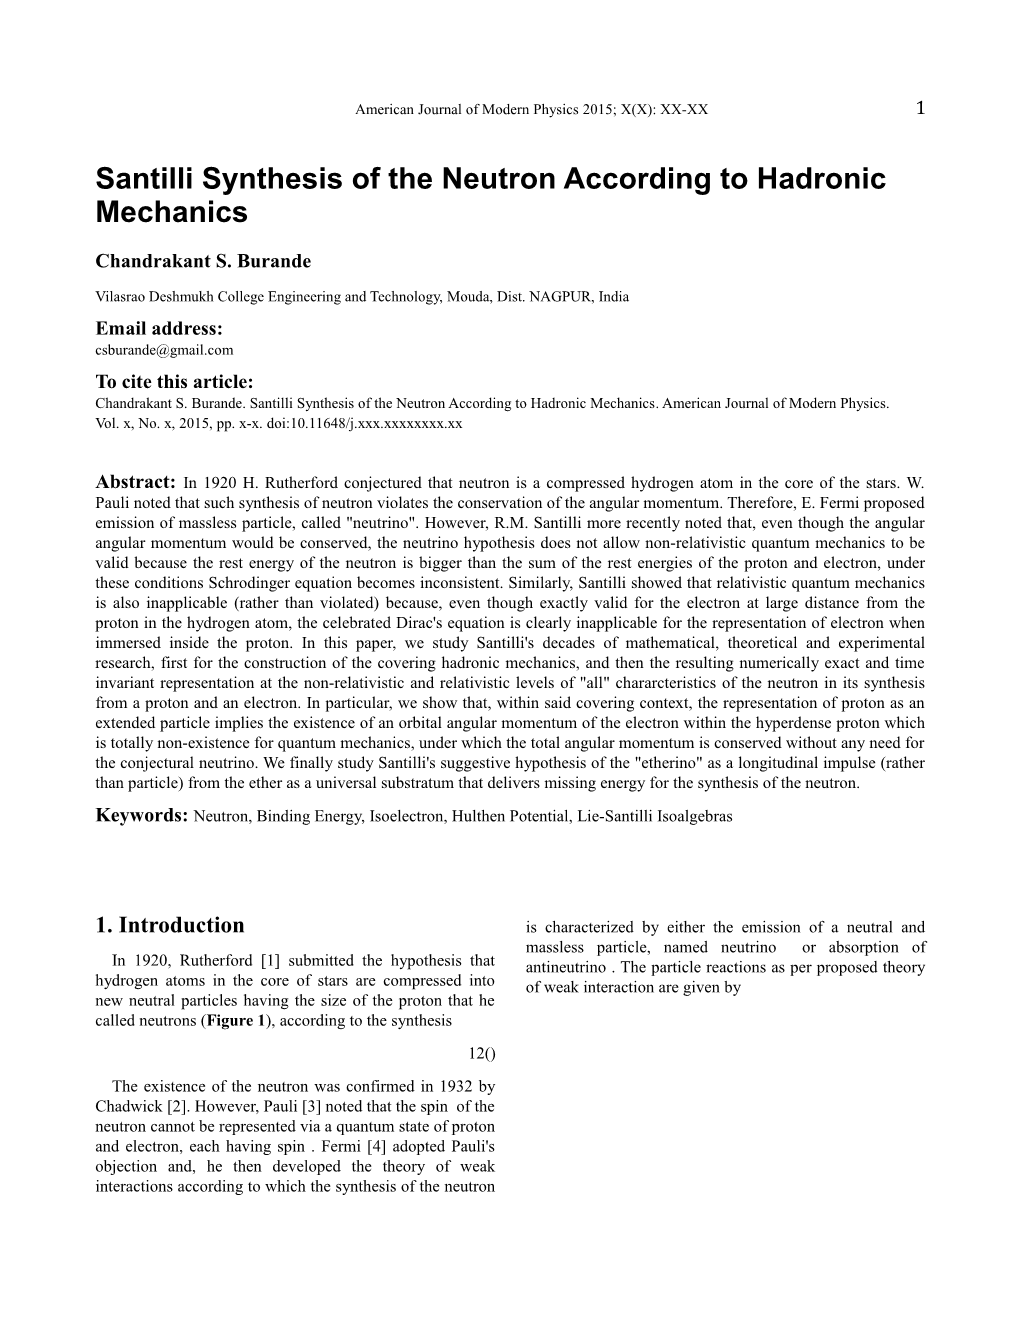 Santilli Synthesis of the Neutron According to Hadronic Mechanics